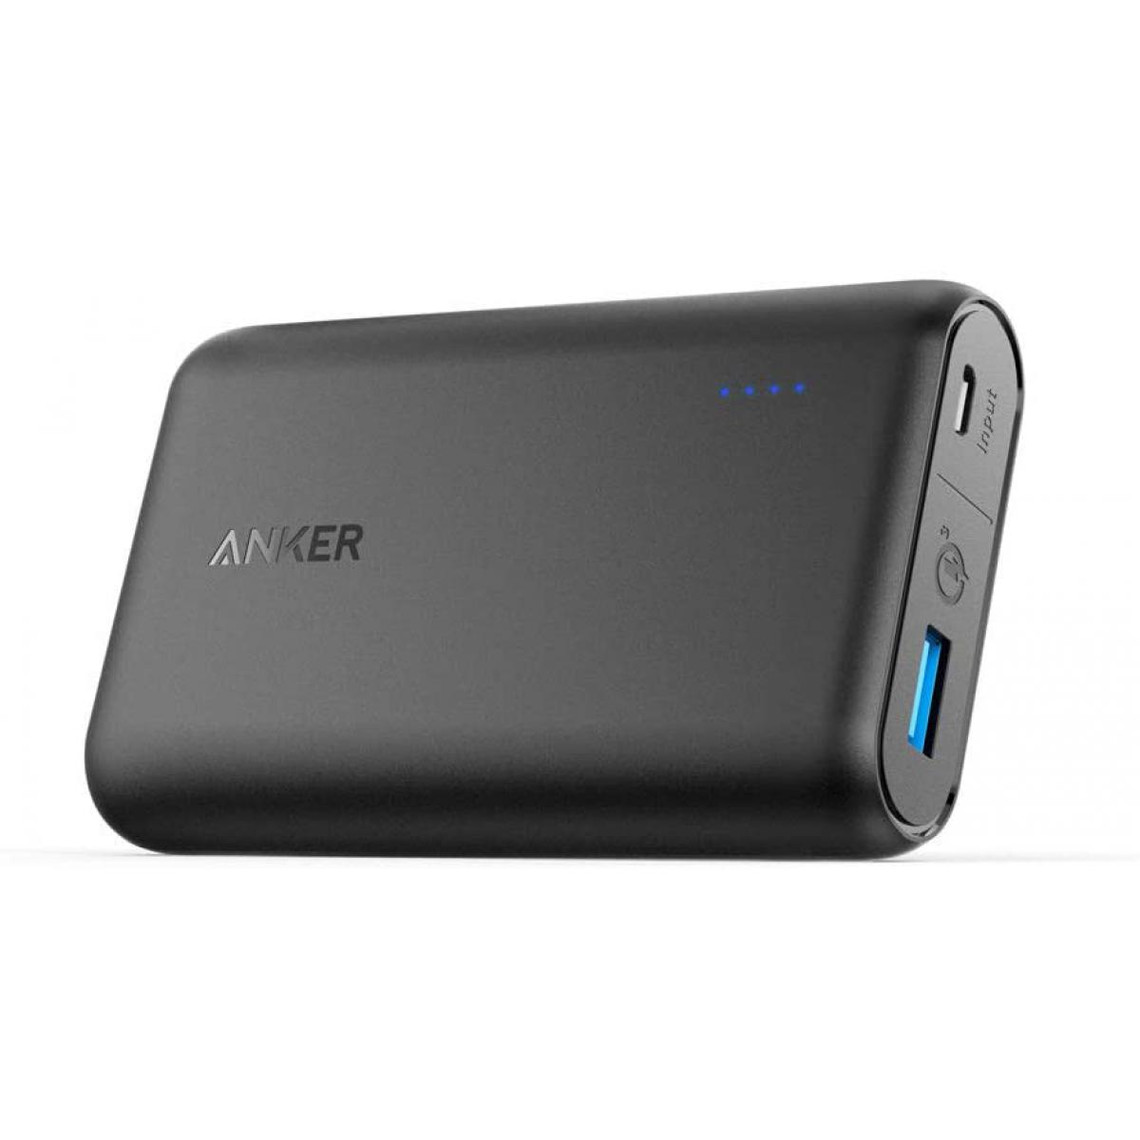 comunicación temerario exprimir Anker - Anker PowerCore Speed 10000mAh Power Bank Batterie Externe avec QC  3.0 et Power IQ Quick Charge 3.0 pour Samsung Galaxy S7 / S6 / Edge iPhone  iPad LG G4 Nexus